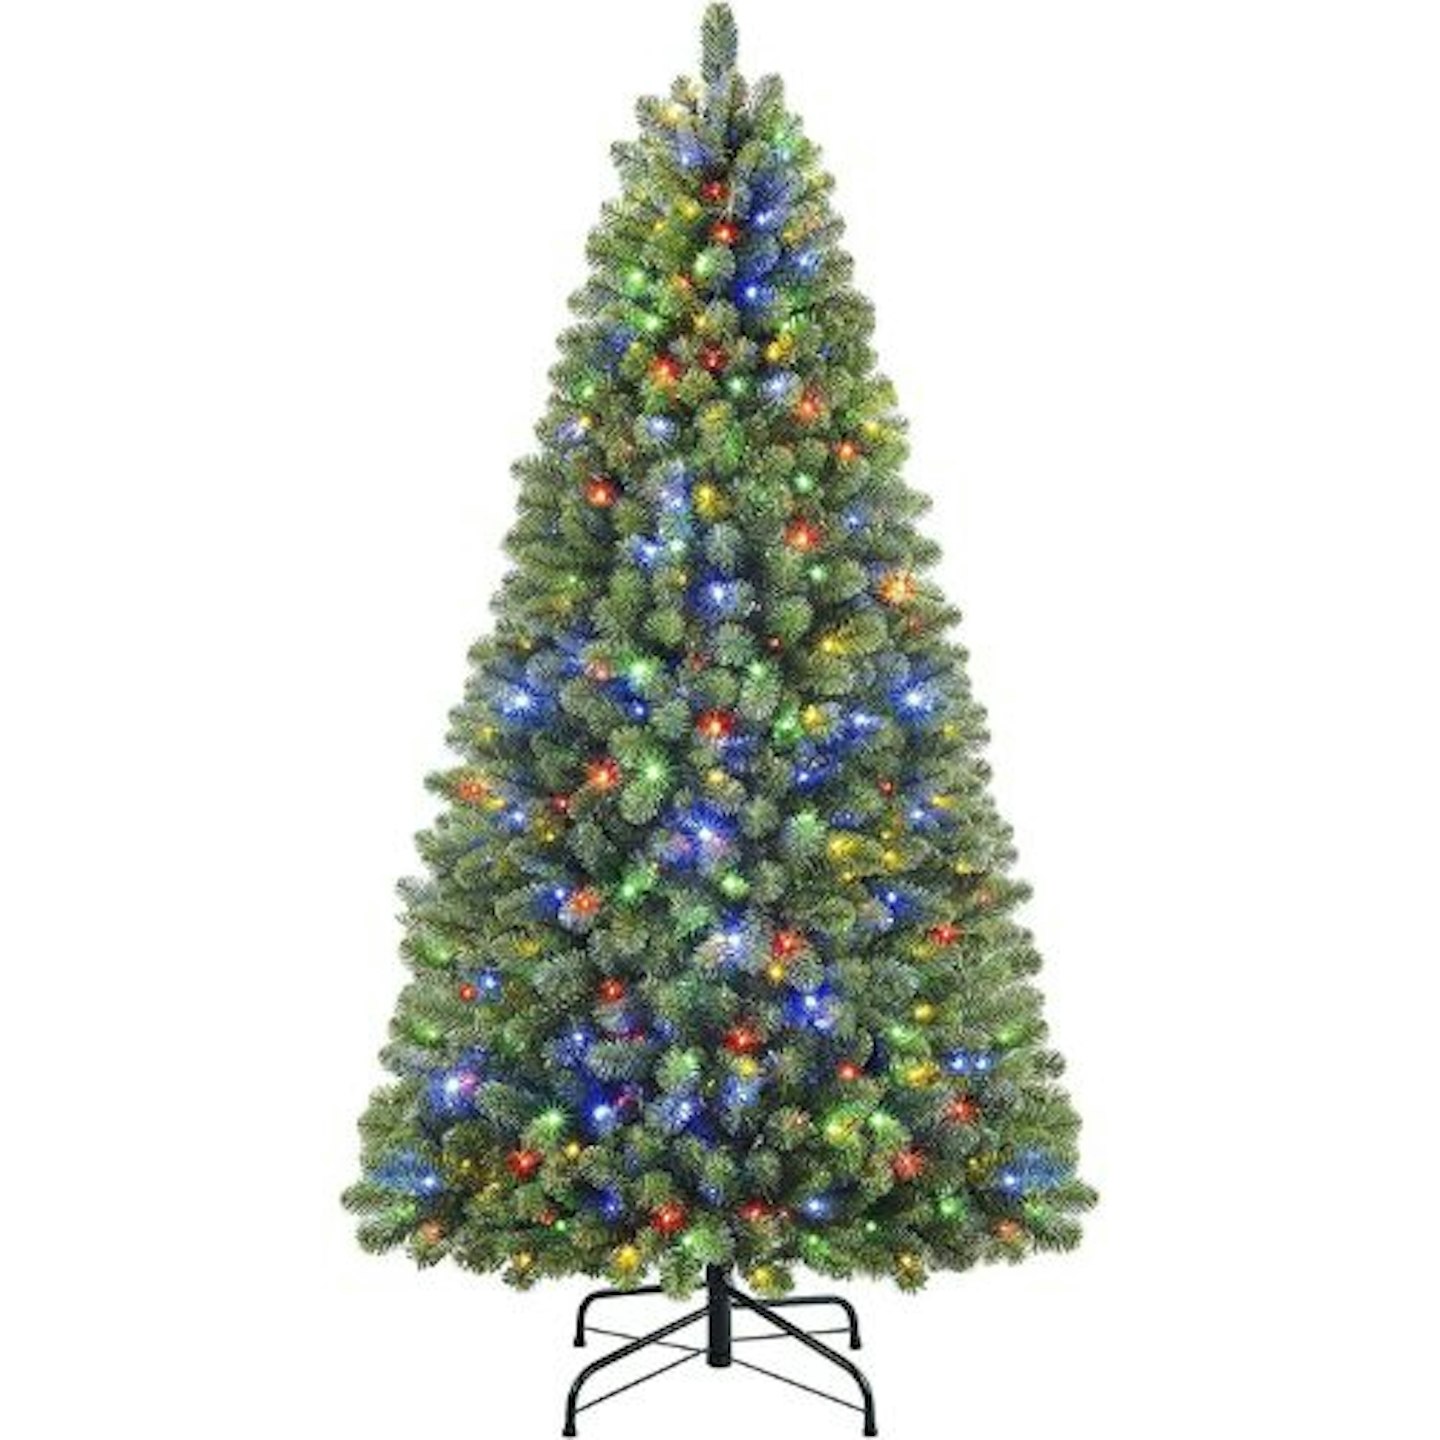 Best artificial Christmas trees SHareconn 6ft Pre-lit Artificial Christmas Tree